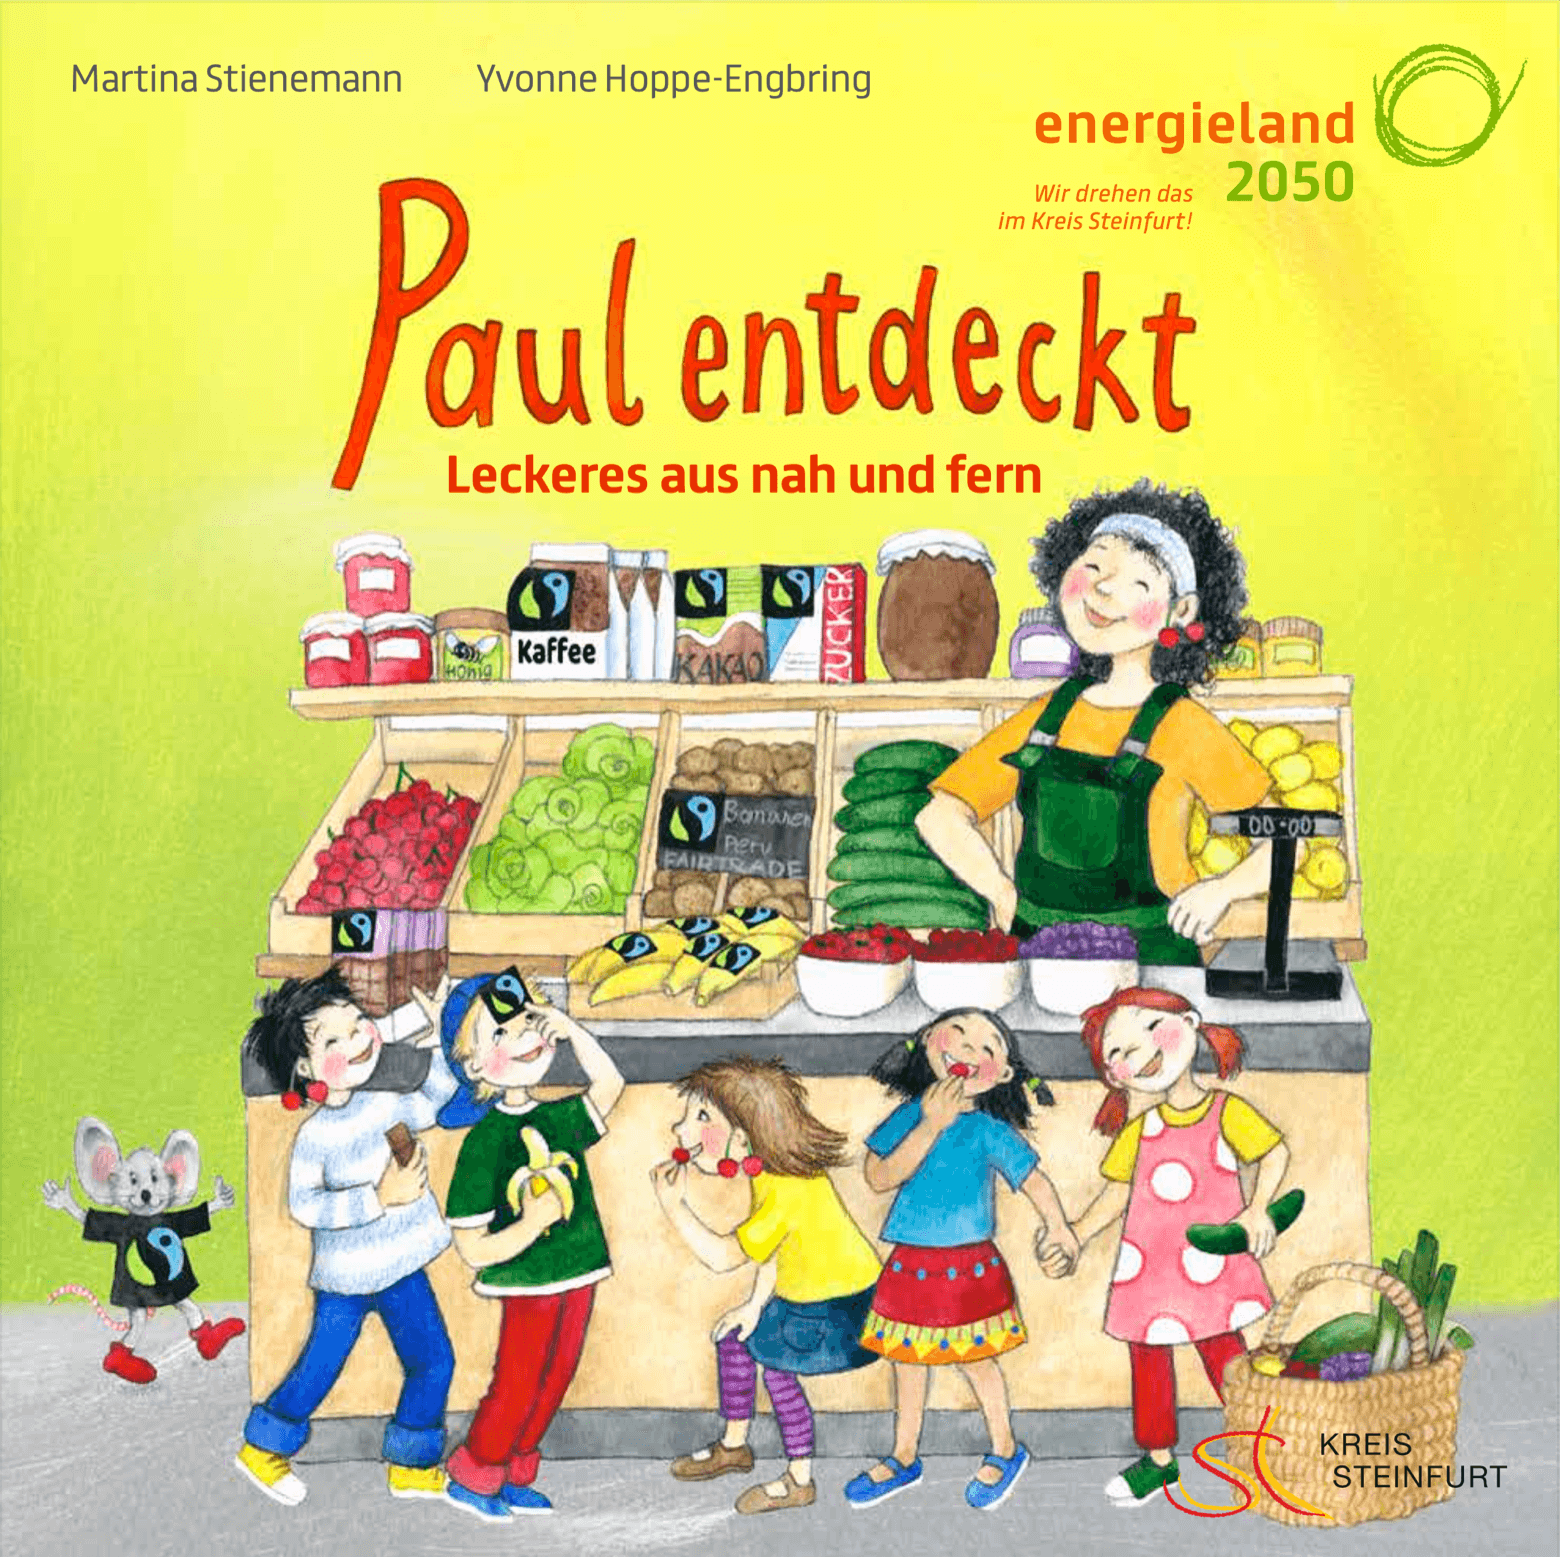 „Paul Marktland entdeckt“ Kinderbuch Tecklenburger |